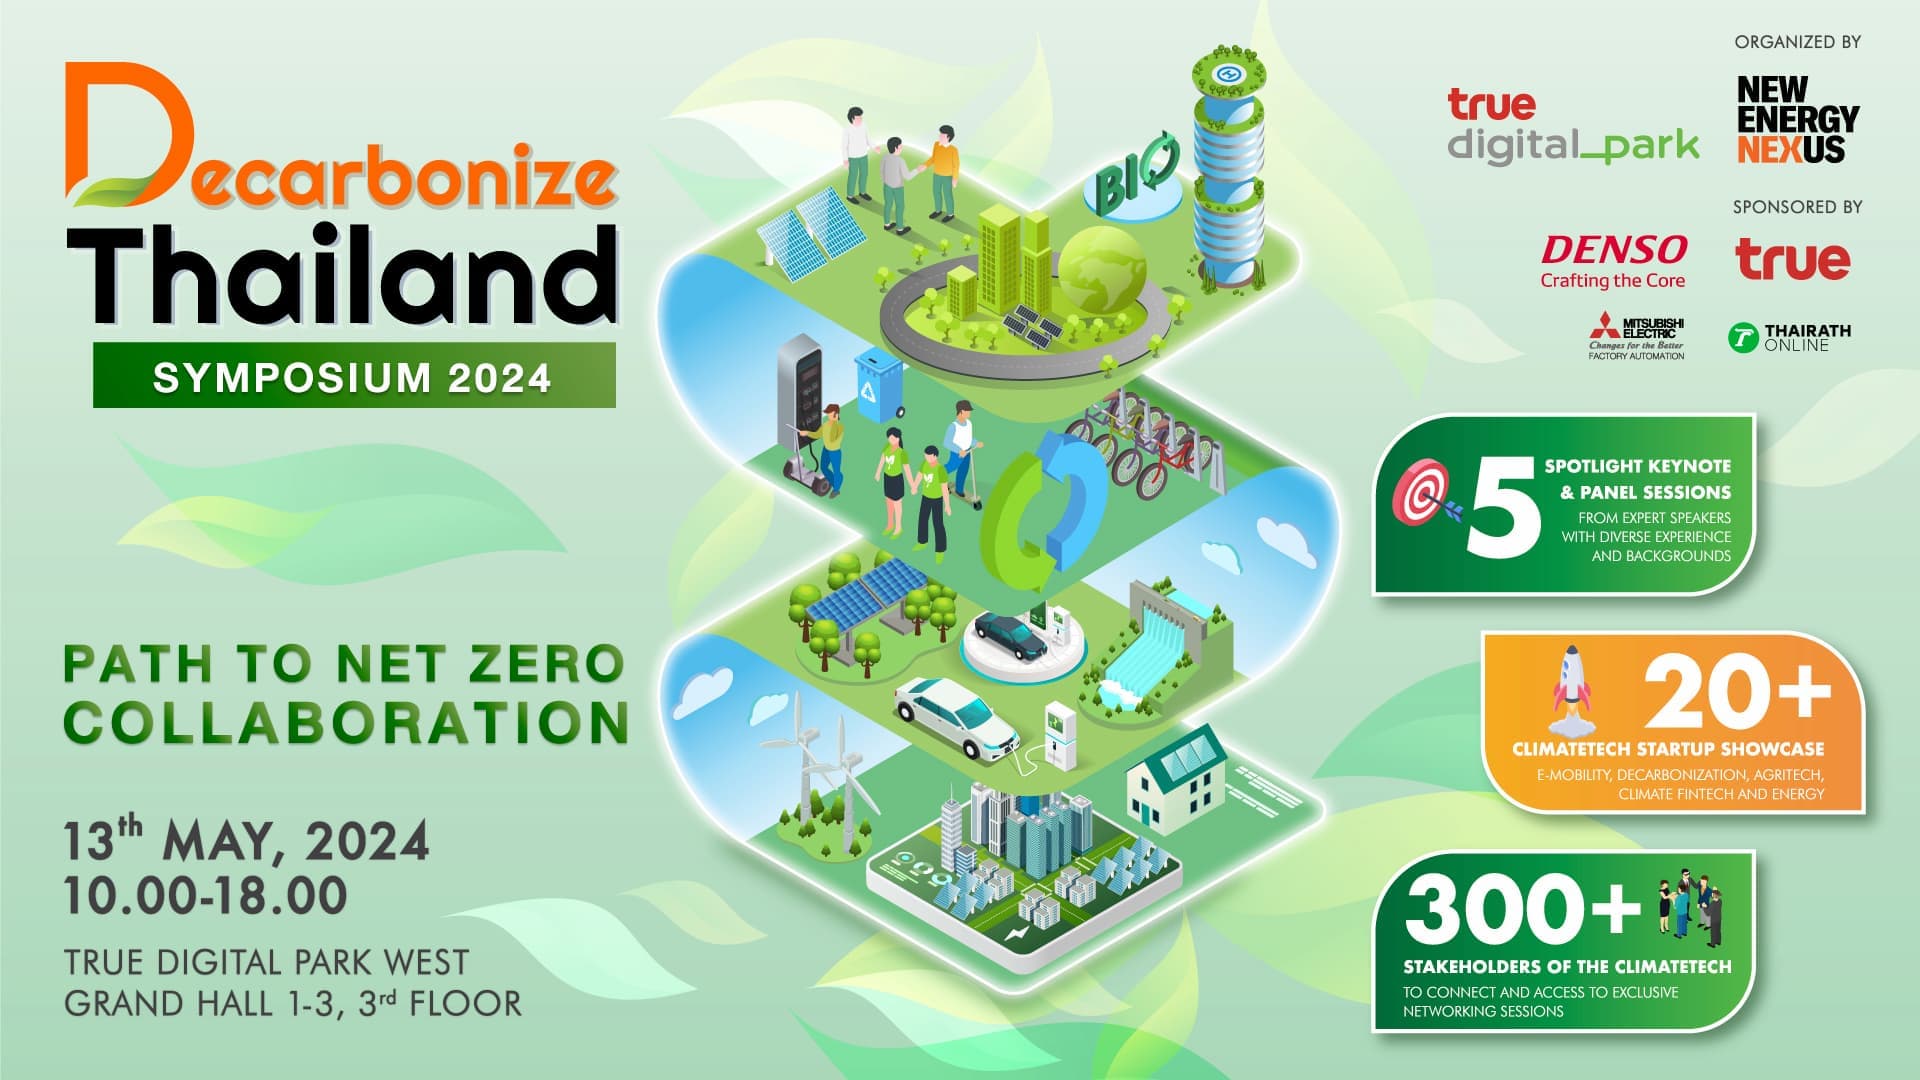 Decarbonize Thailand Symposium 2024: Path to Net Zero Collaboration